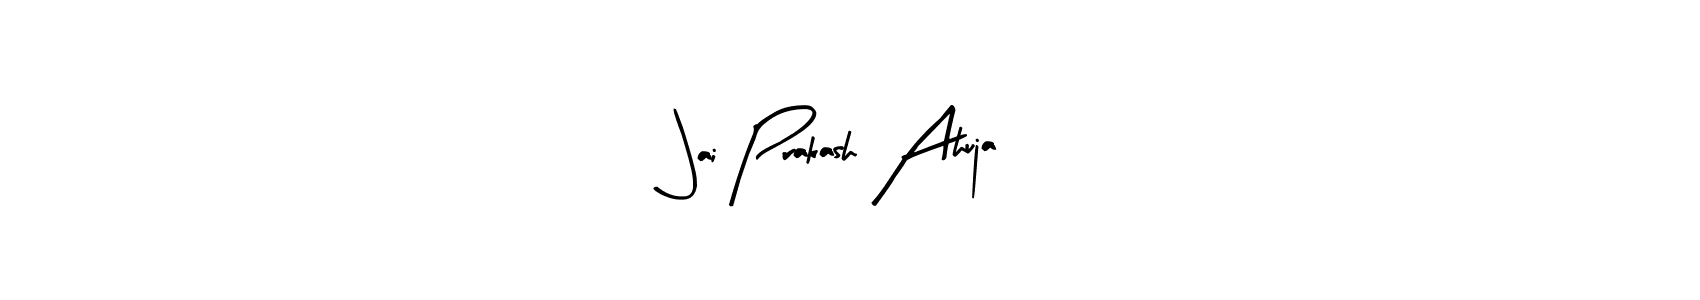 How to make Jai Prakash Ahuja signature? Arty Signature is a professional autograph style. Create handwritten signature for Jai Prakash Ahuja name. Jai Prakash Ahuja signature style 8 images and pictures png